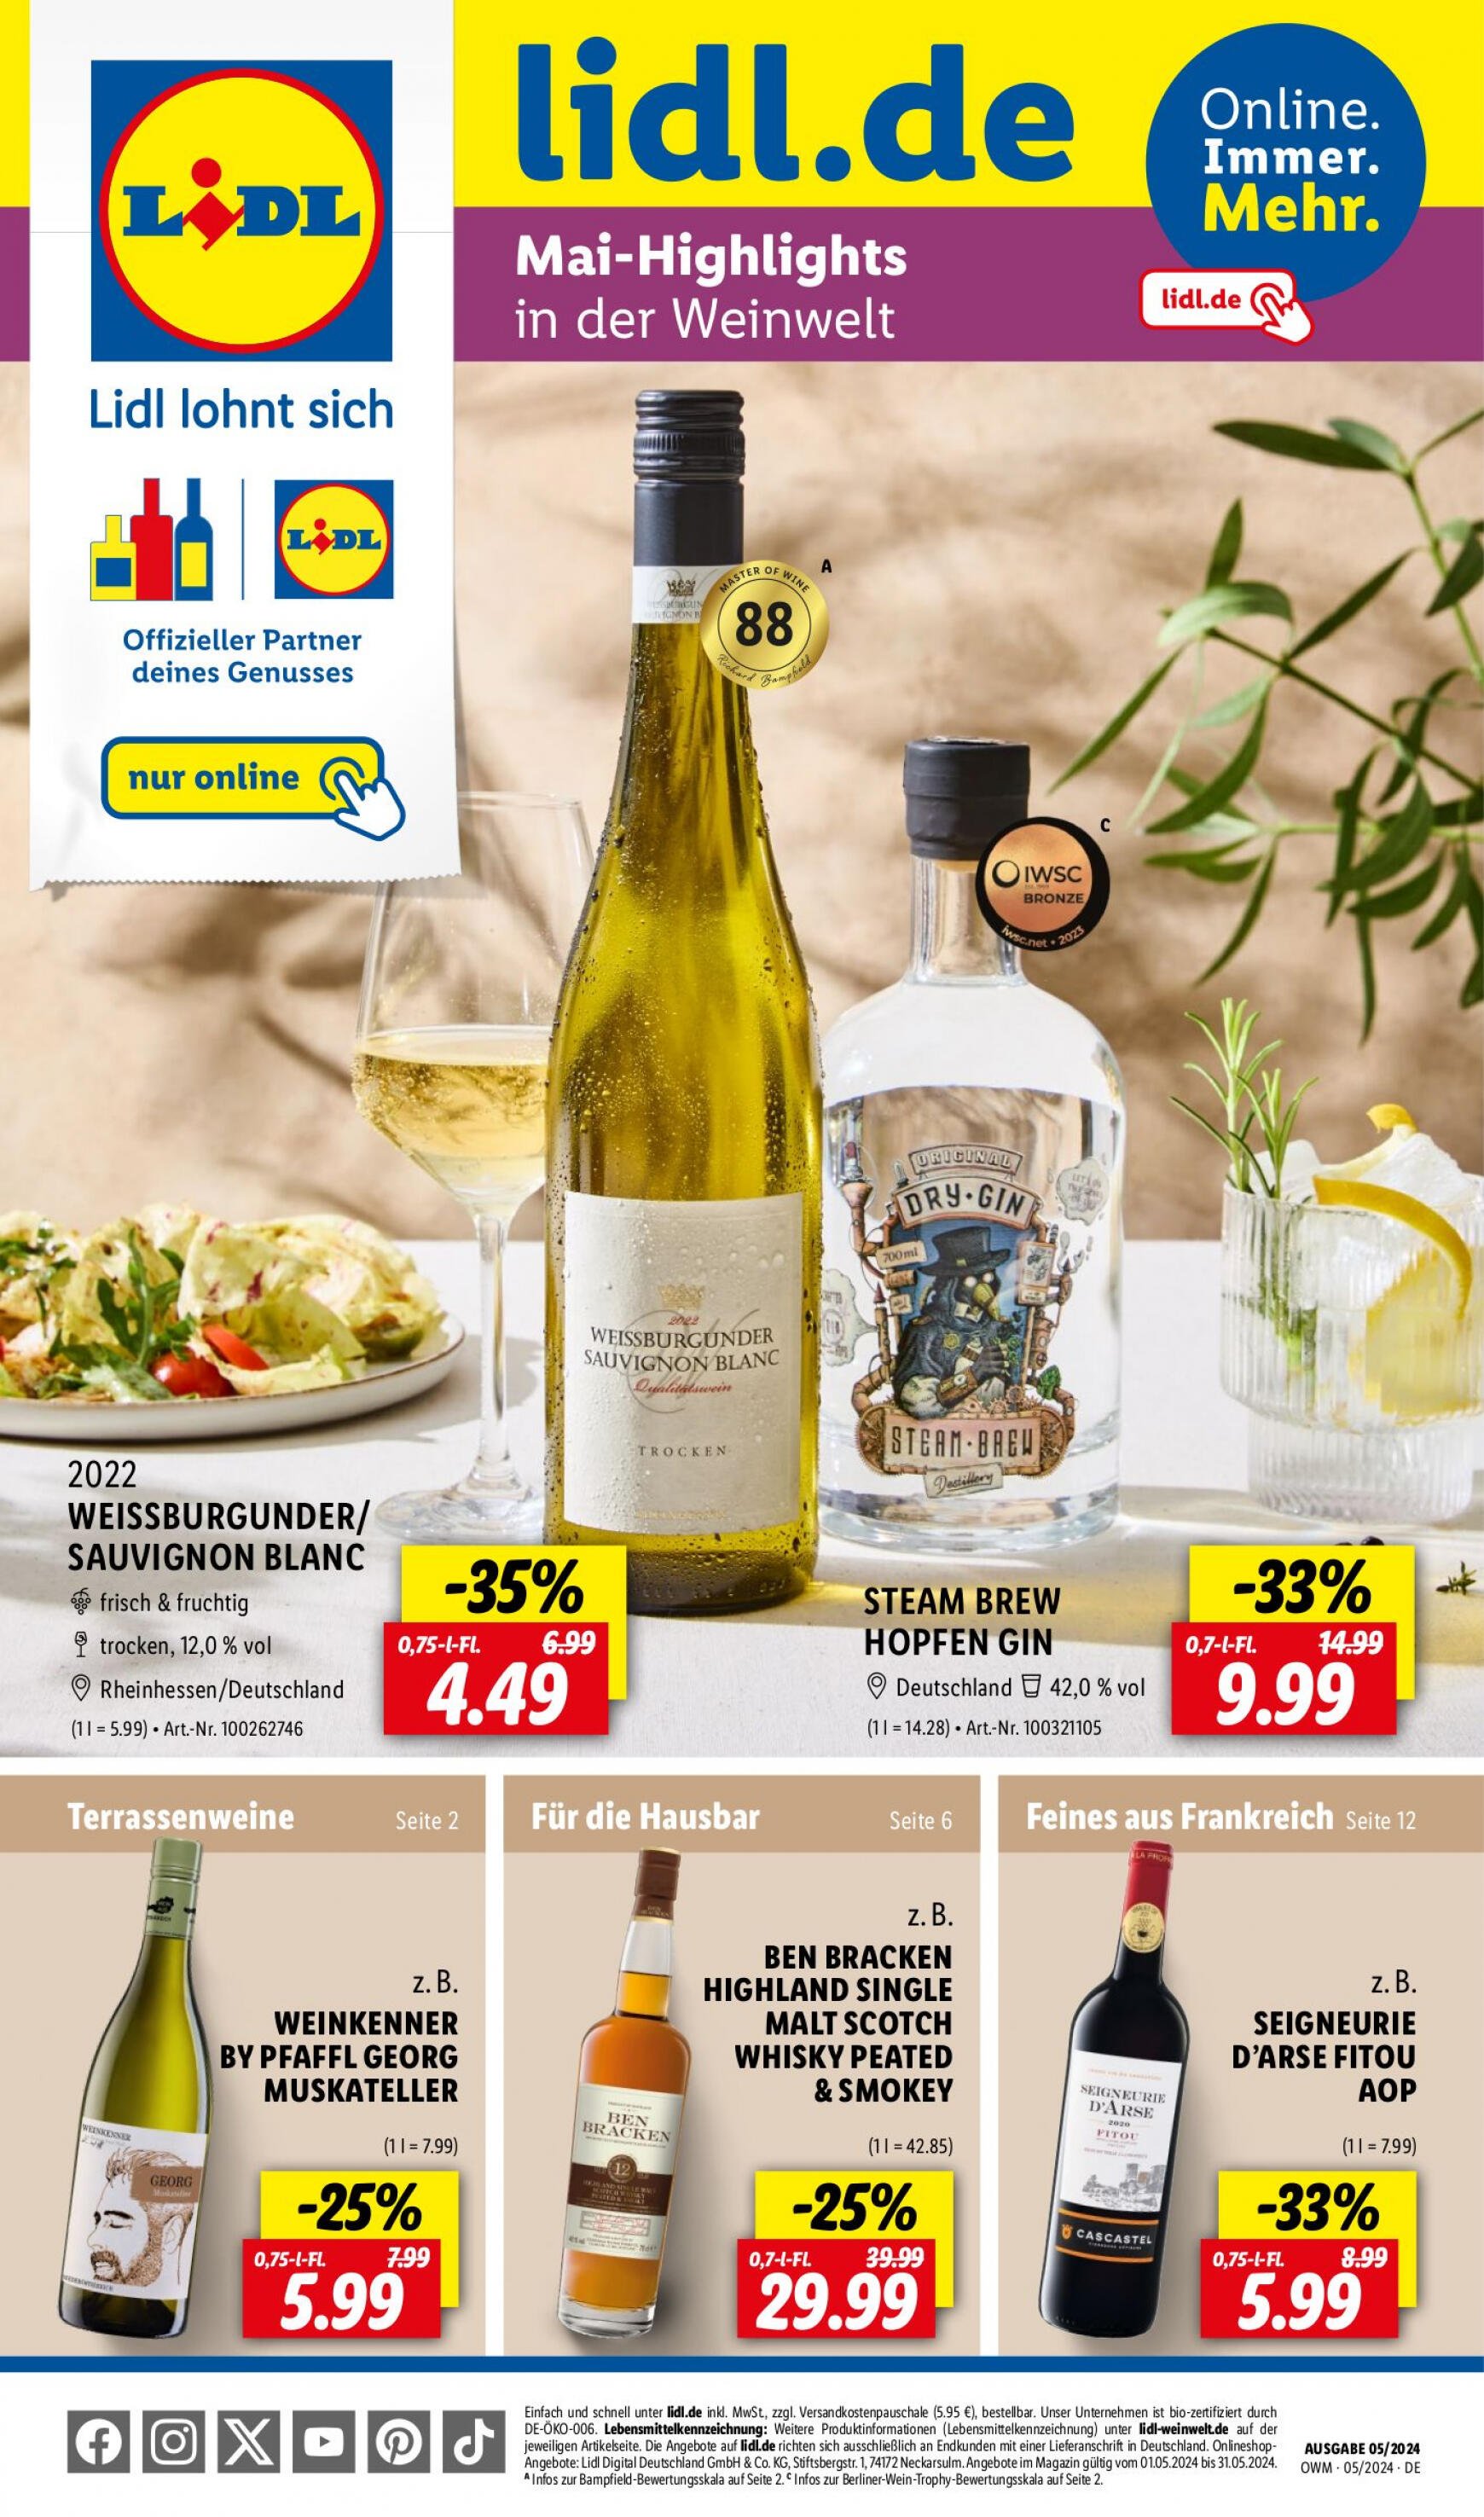 lidl - Flyer Lidl - Highlights in der Weinwelt aktuell 01.05. - 31.05.